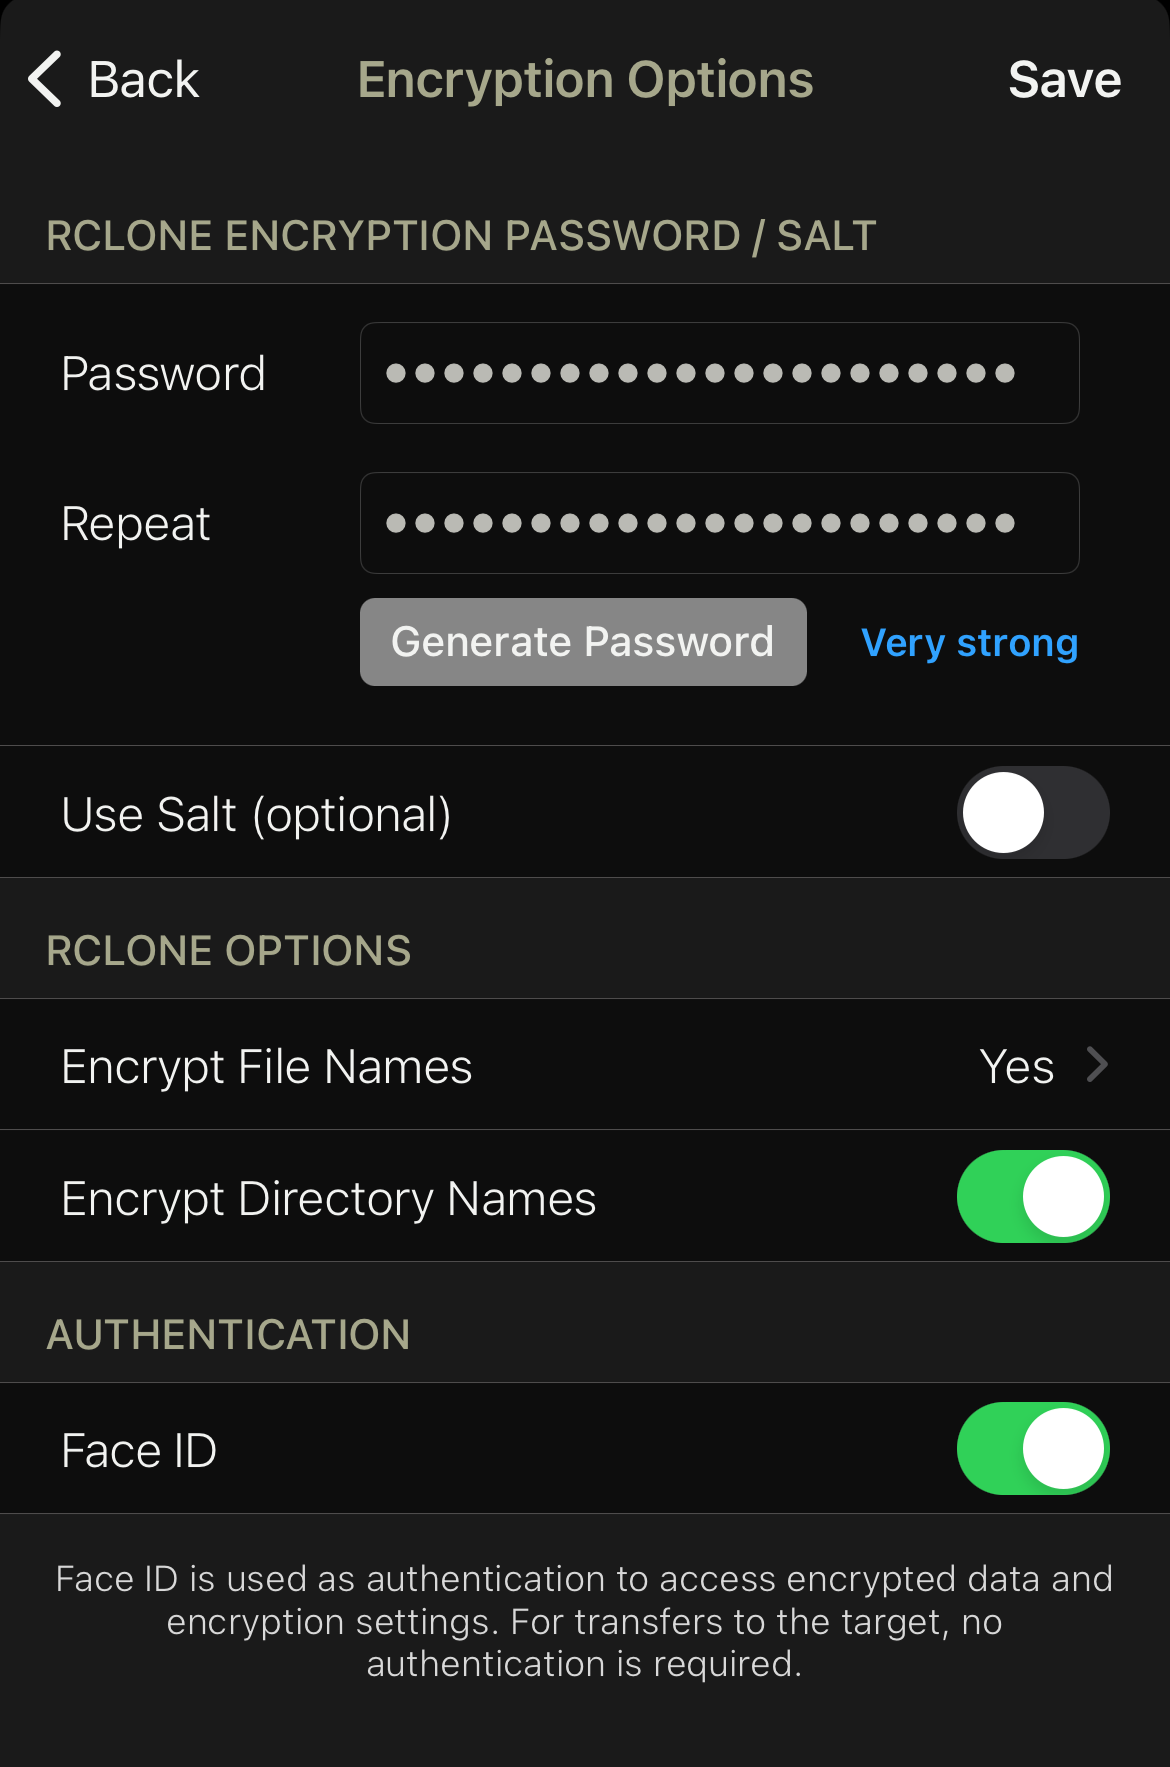 Rclone encryption options